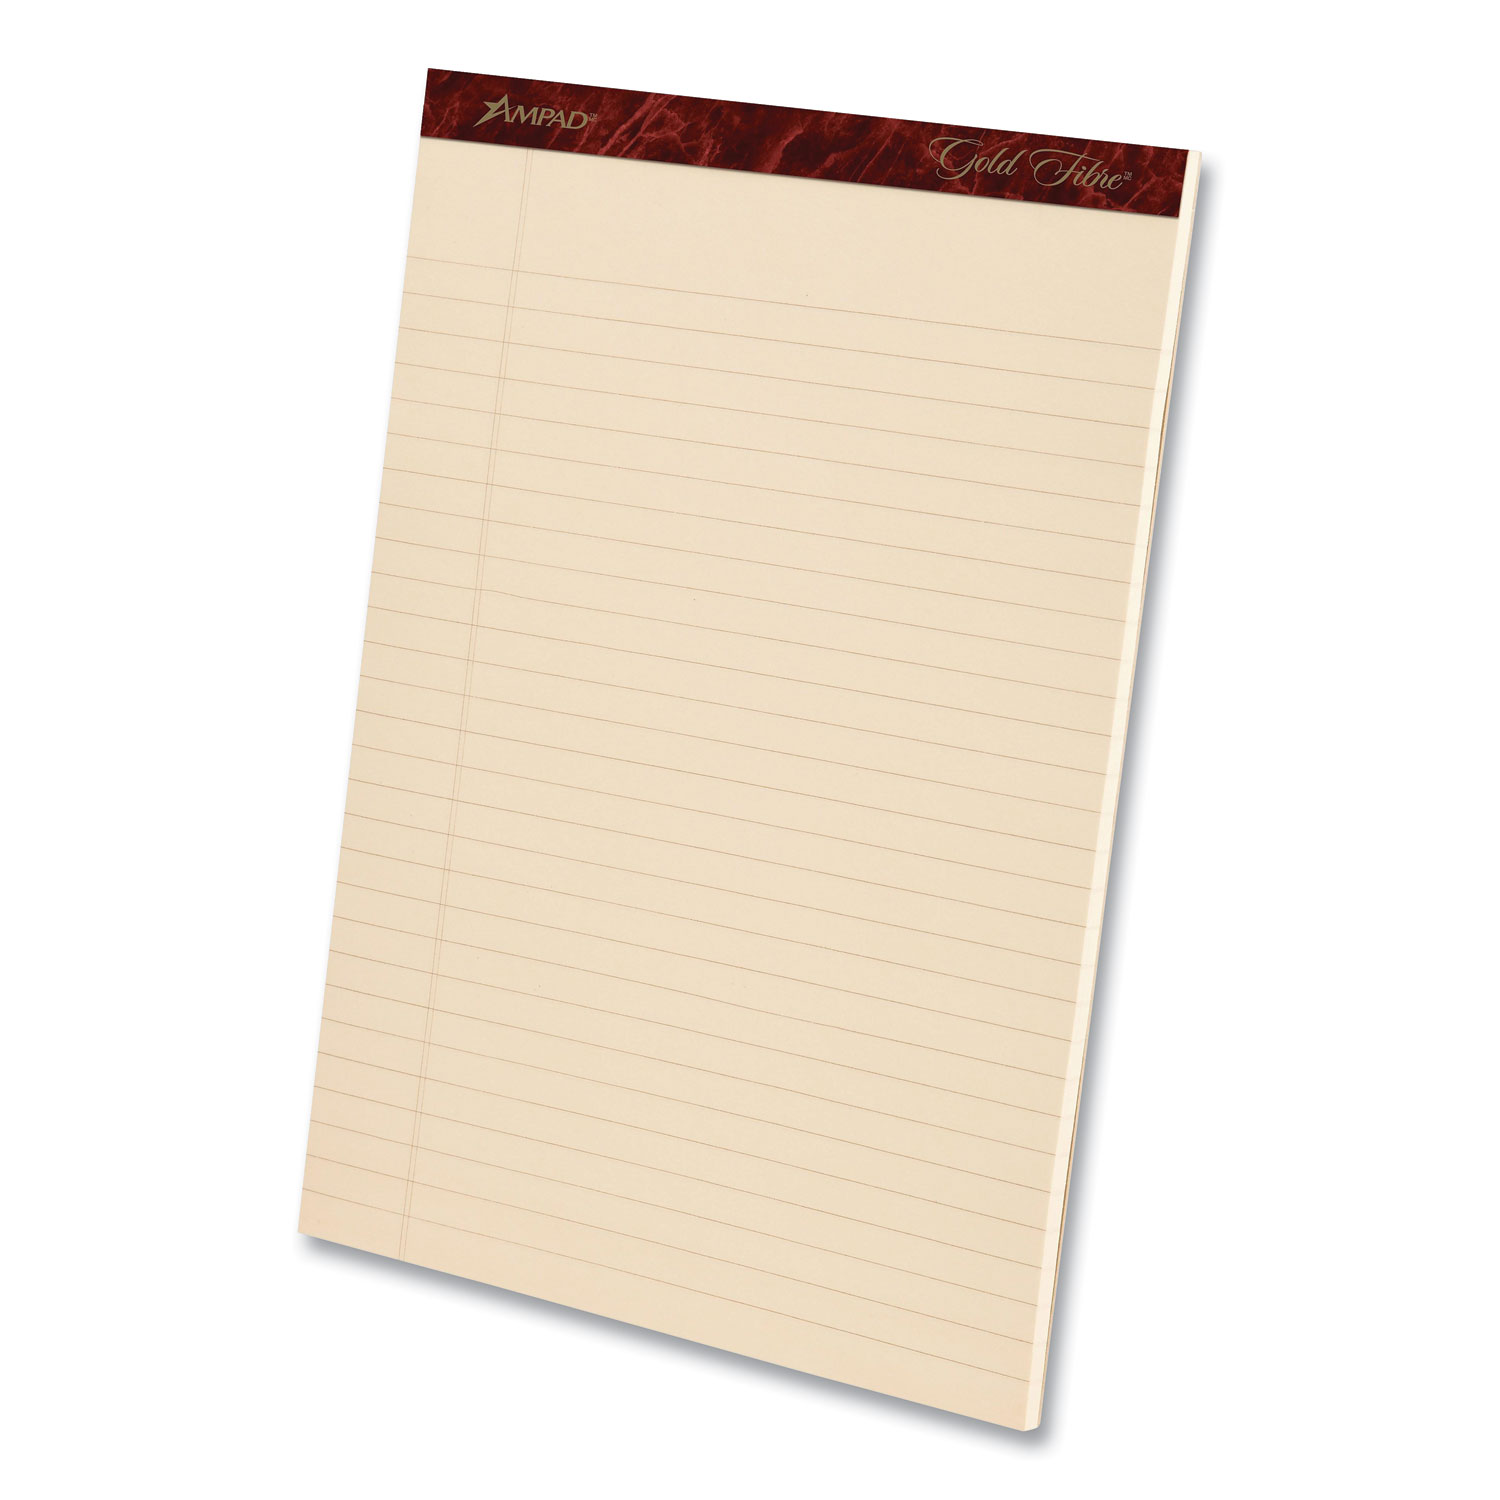 Ampad® Gold Fibre Retro Writing Pads, Wide/Legal Rule, 8.5 x 11.75, Antique Ivory, 50 Sheets, Dozen